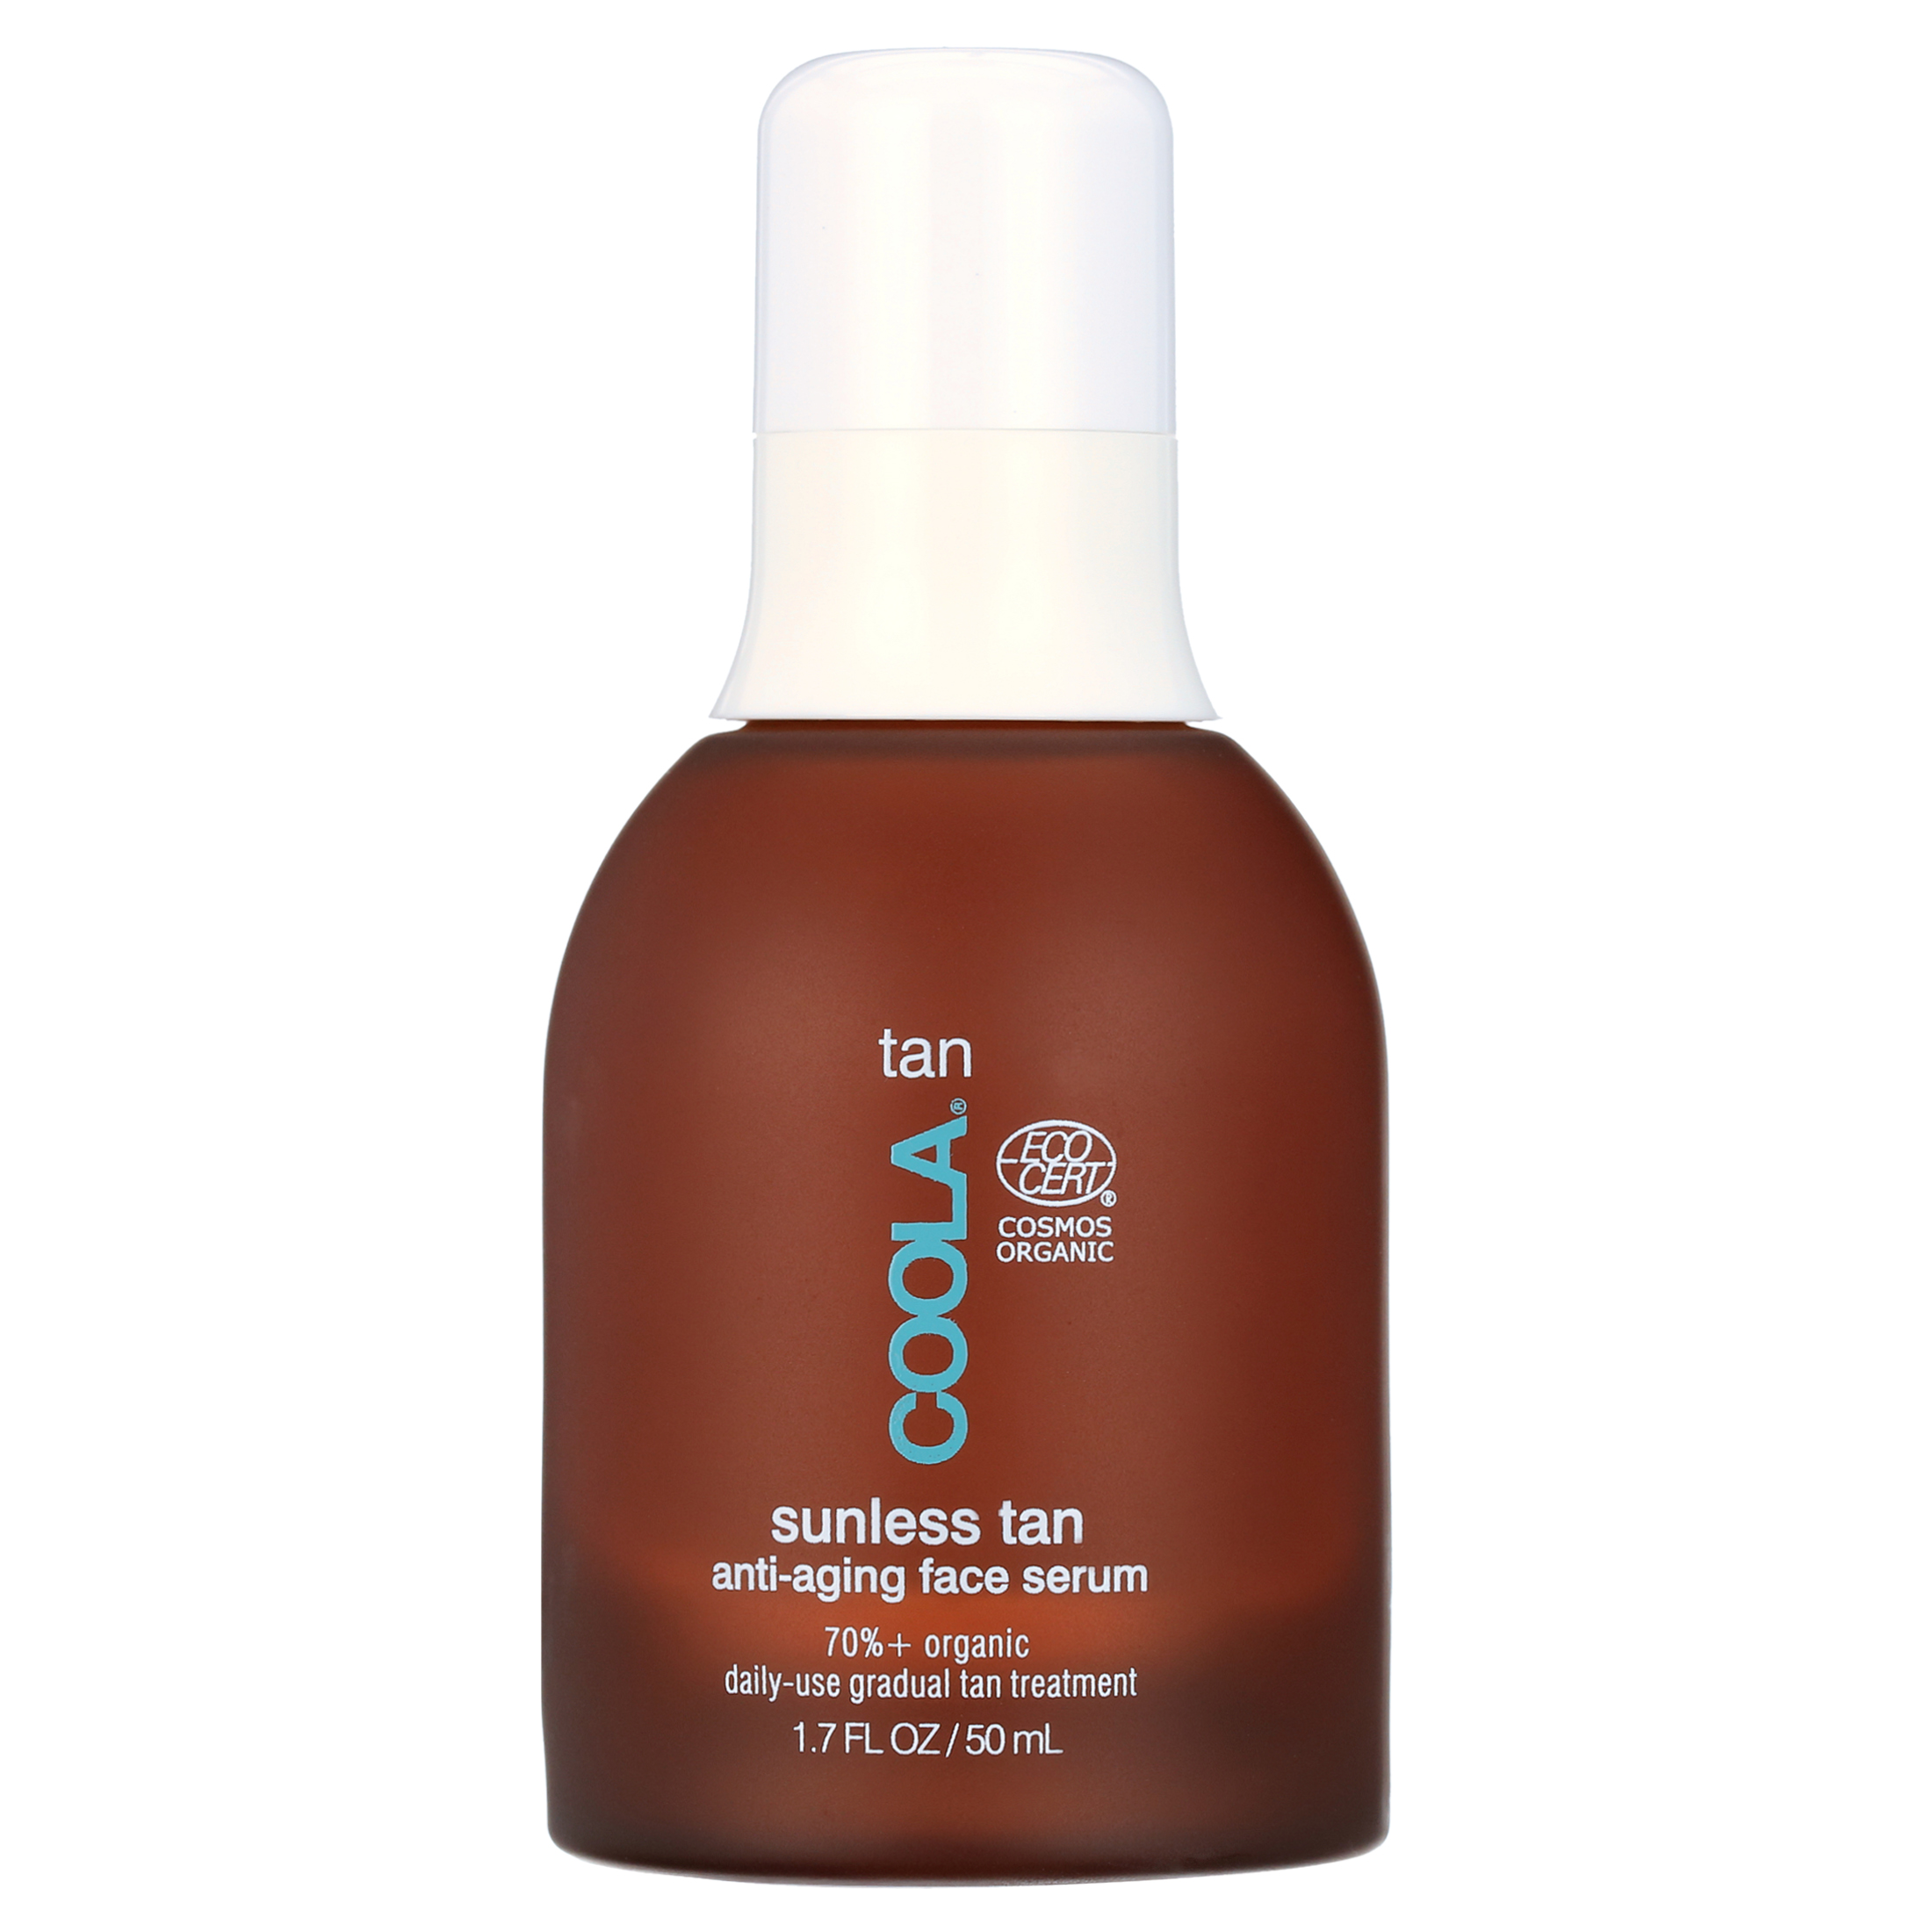 COOLA Organic Sunless Tanner Serum, Self Tan Face Serum for Anti-Aging and Skin Care, Piña Colada, 1.7 fl oz - image 1 of 10